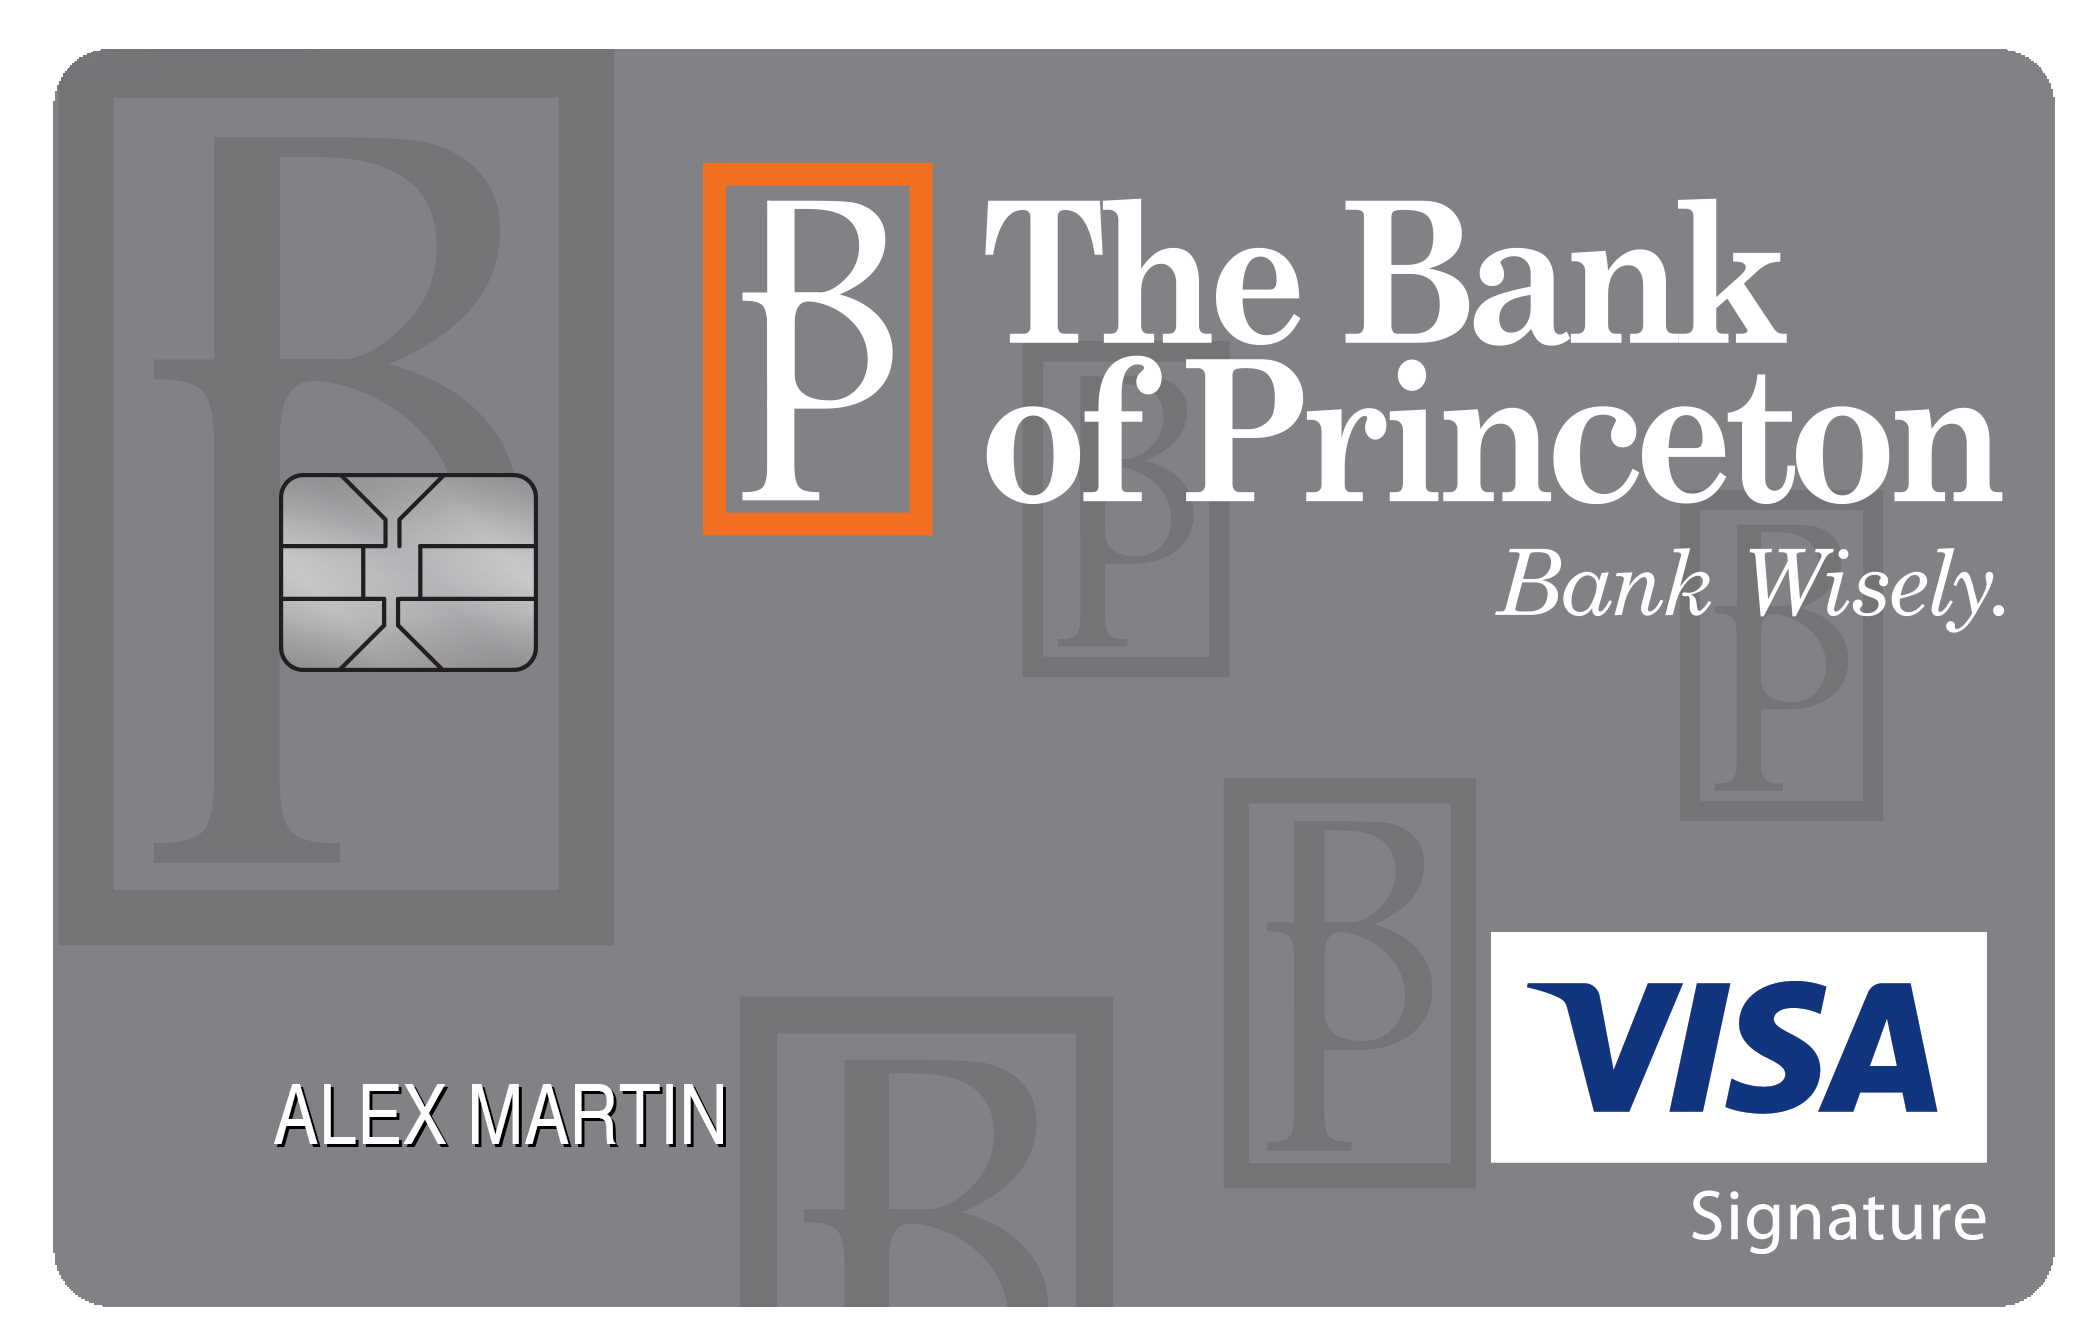 The Bank of Princeton Travel Rewards+ Card